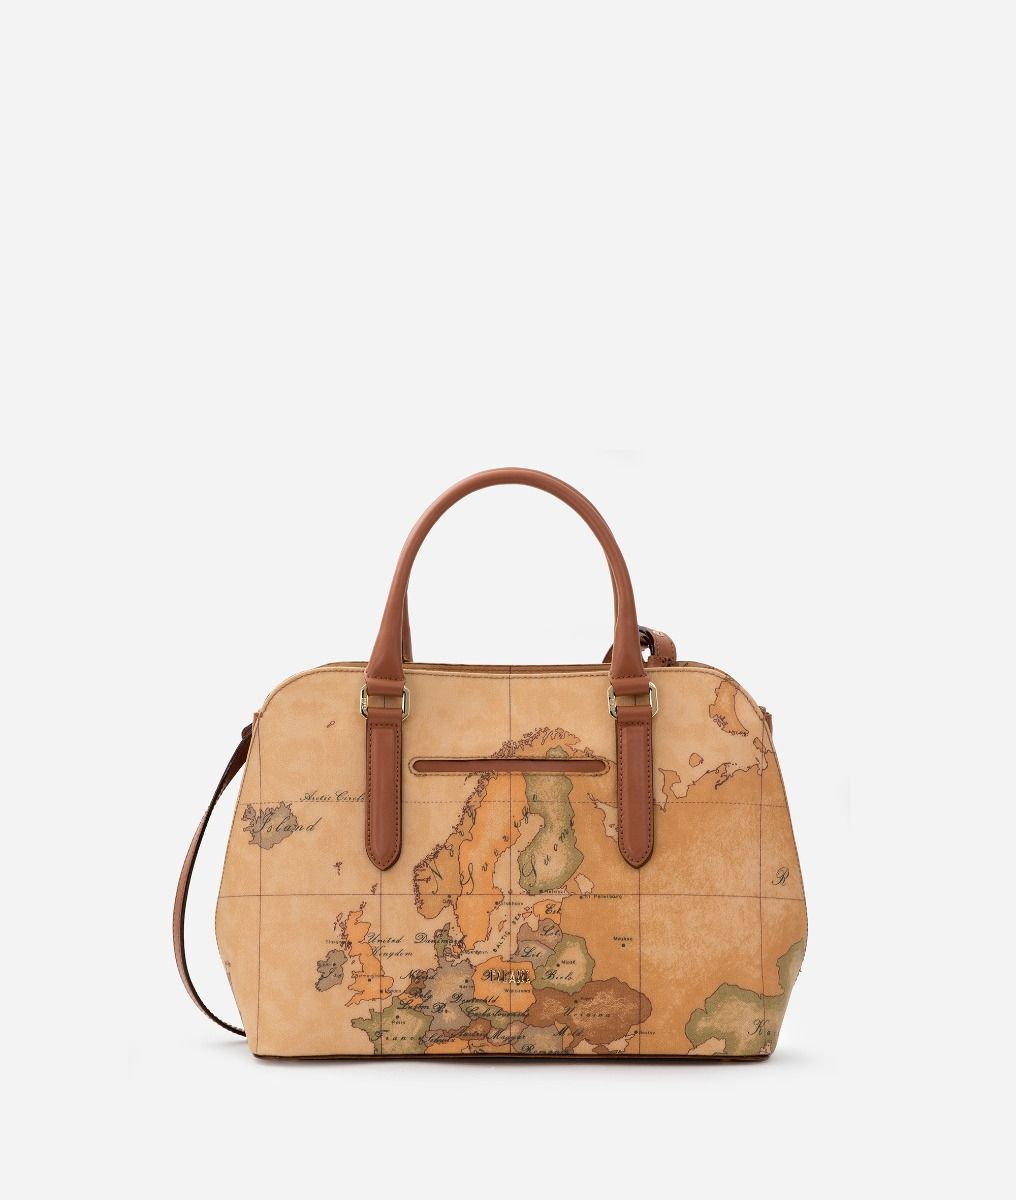 Geo Classic handbag with shoulder strap,front